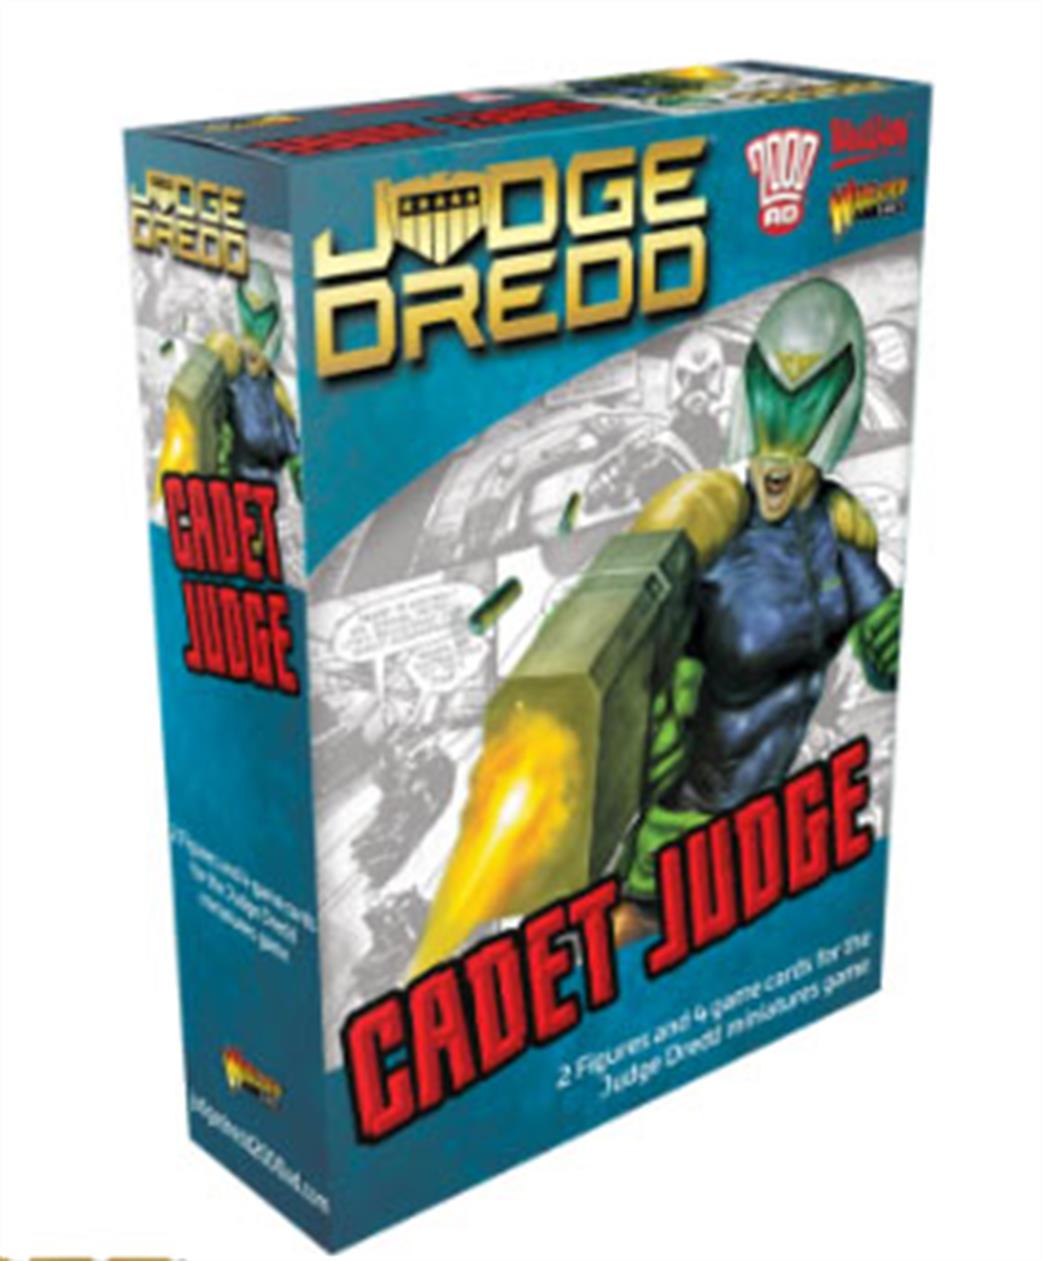 Warlord  652210109 Judge Dredd Cadet Judge figure set